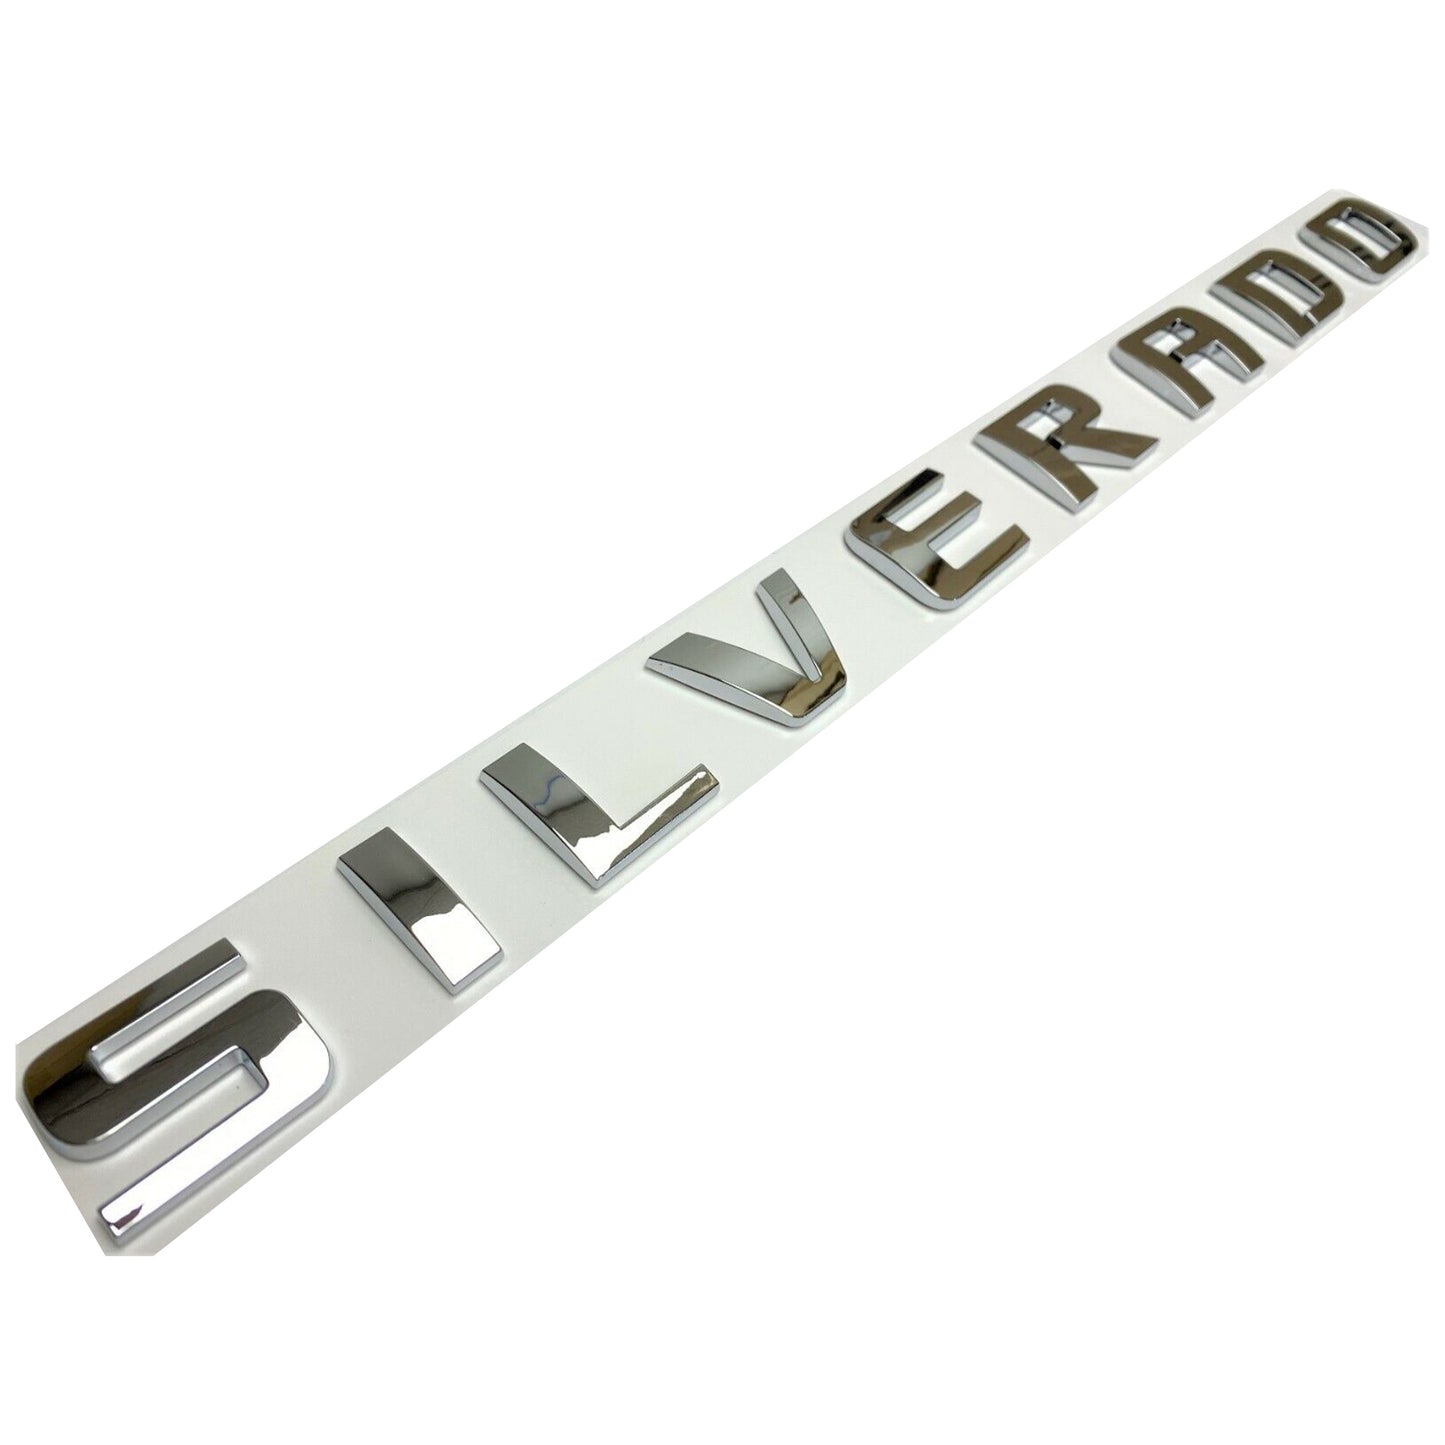 Chevrolet Chevy Silverado Door Tailgate Emblem Badge Nameplates Letter Decal Emblem X1